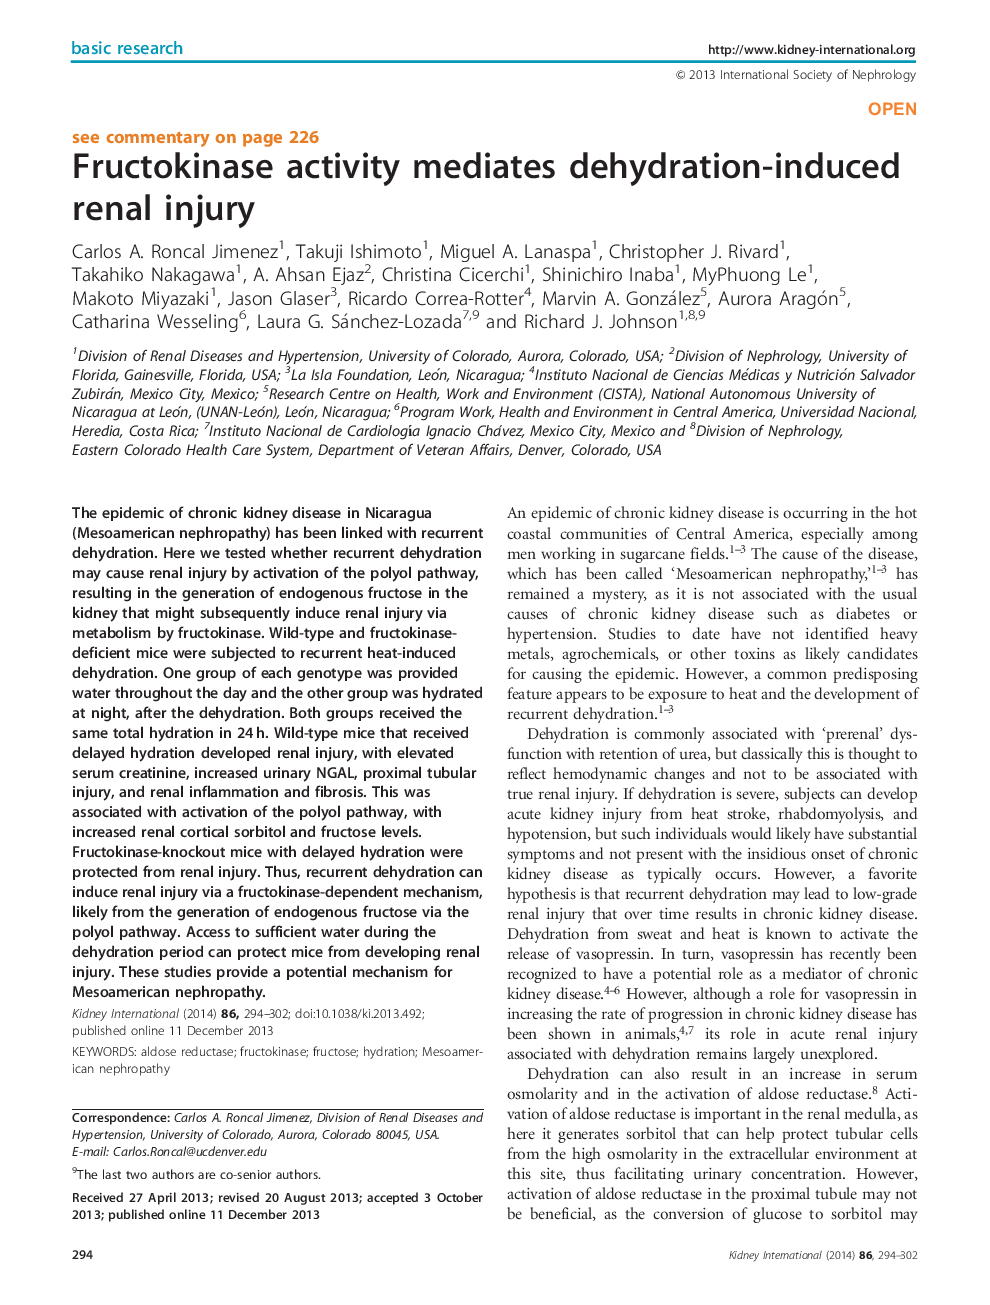 Fructokinase activity mediates dehydration-induced renal injury